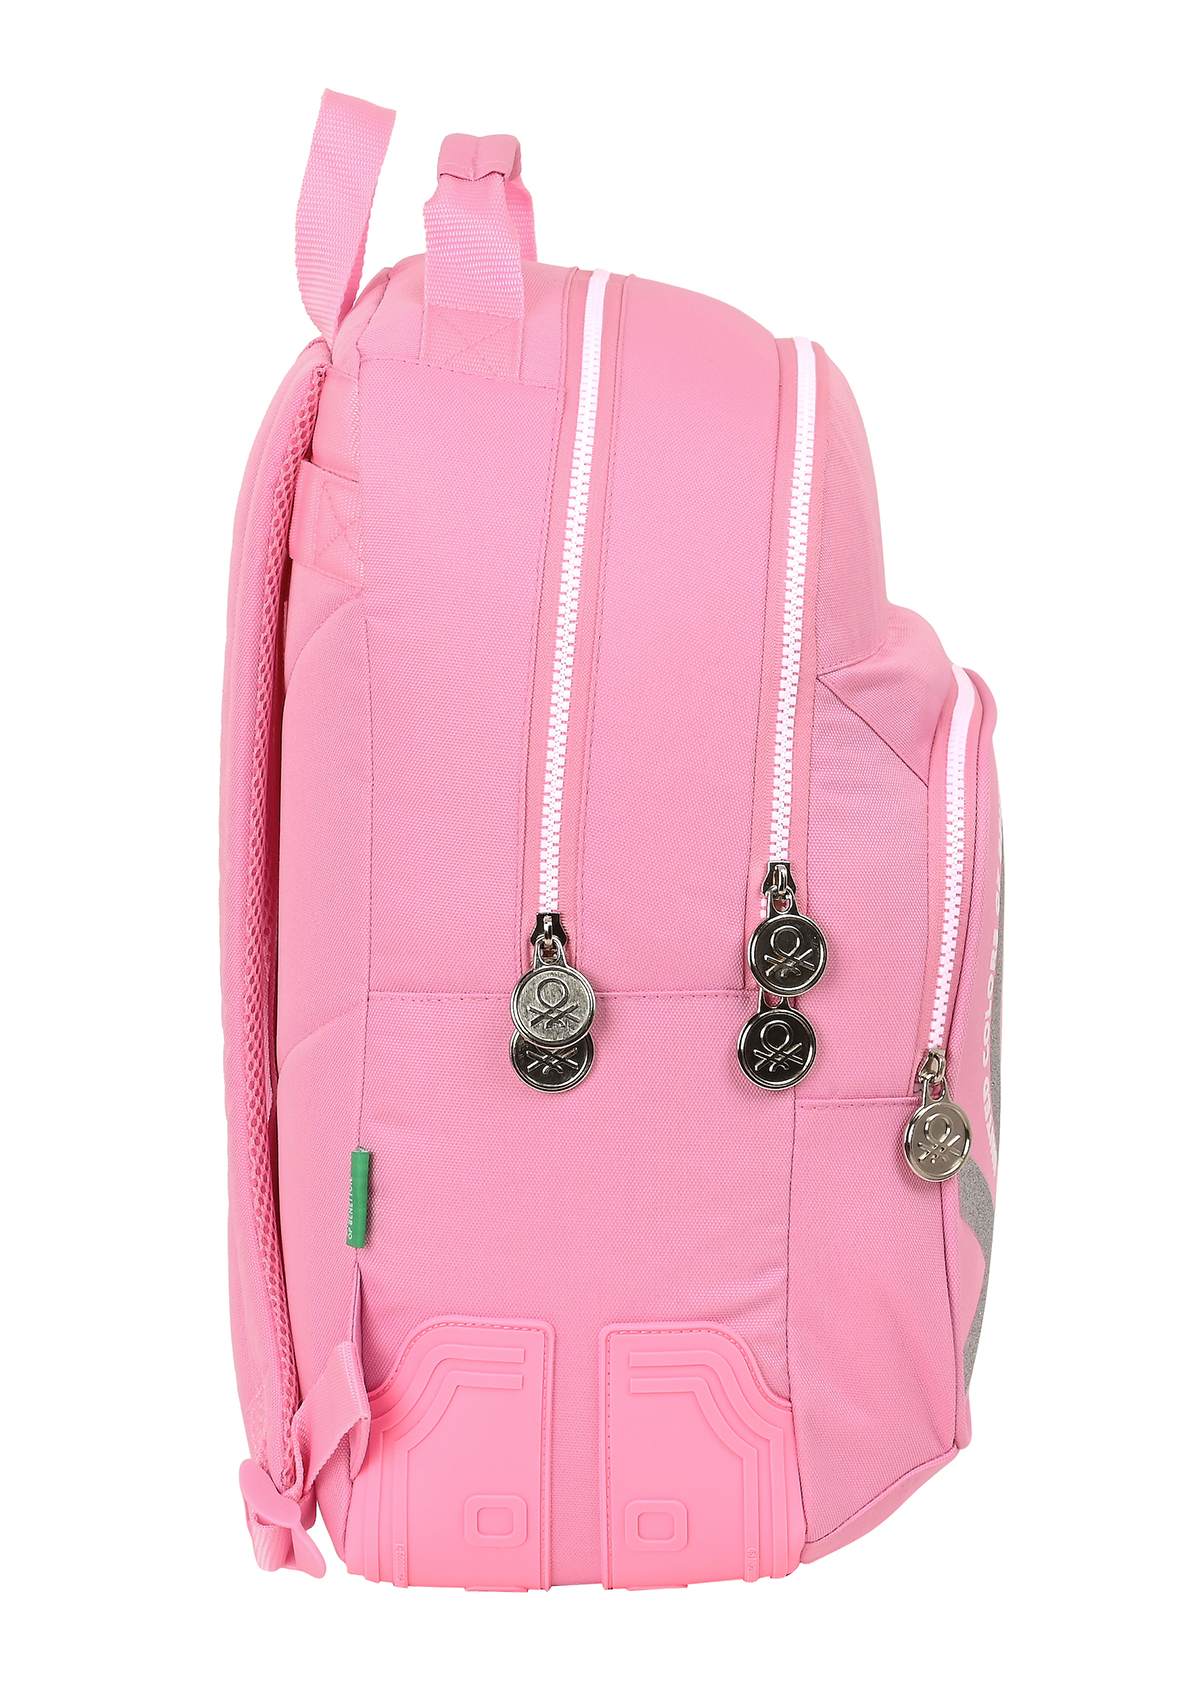 Benetton Flamingo Pink Large Backpack